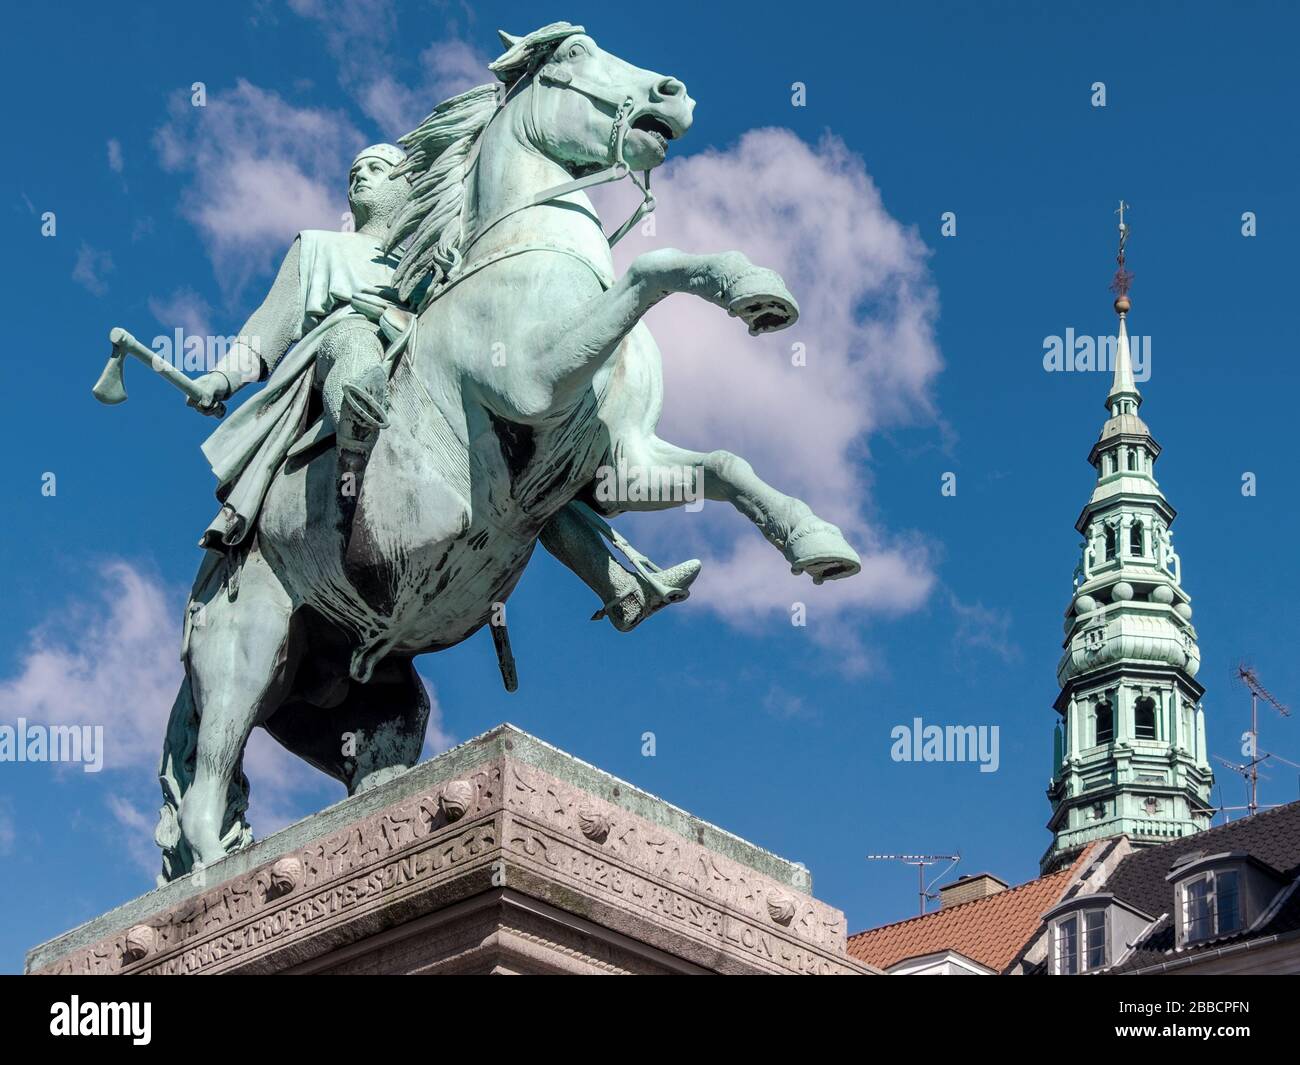 Estatua de Absalon, un caballero del obispo guerrero que fue el fundador de Copenhague, a caballo en Højbro Plads, Copenhague, Dinamarca Foto de stock